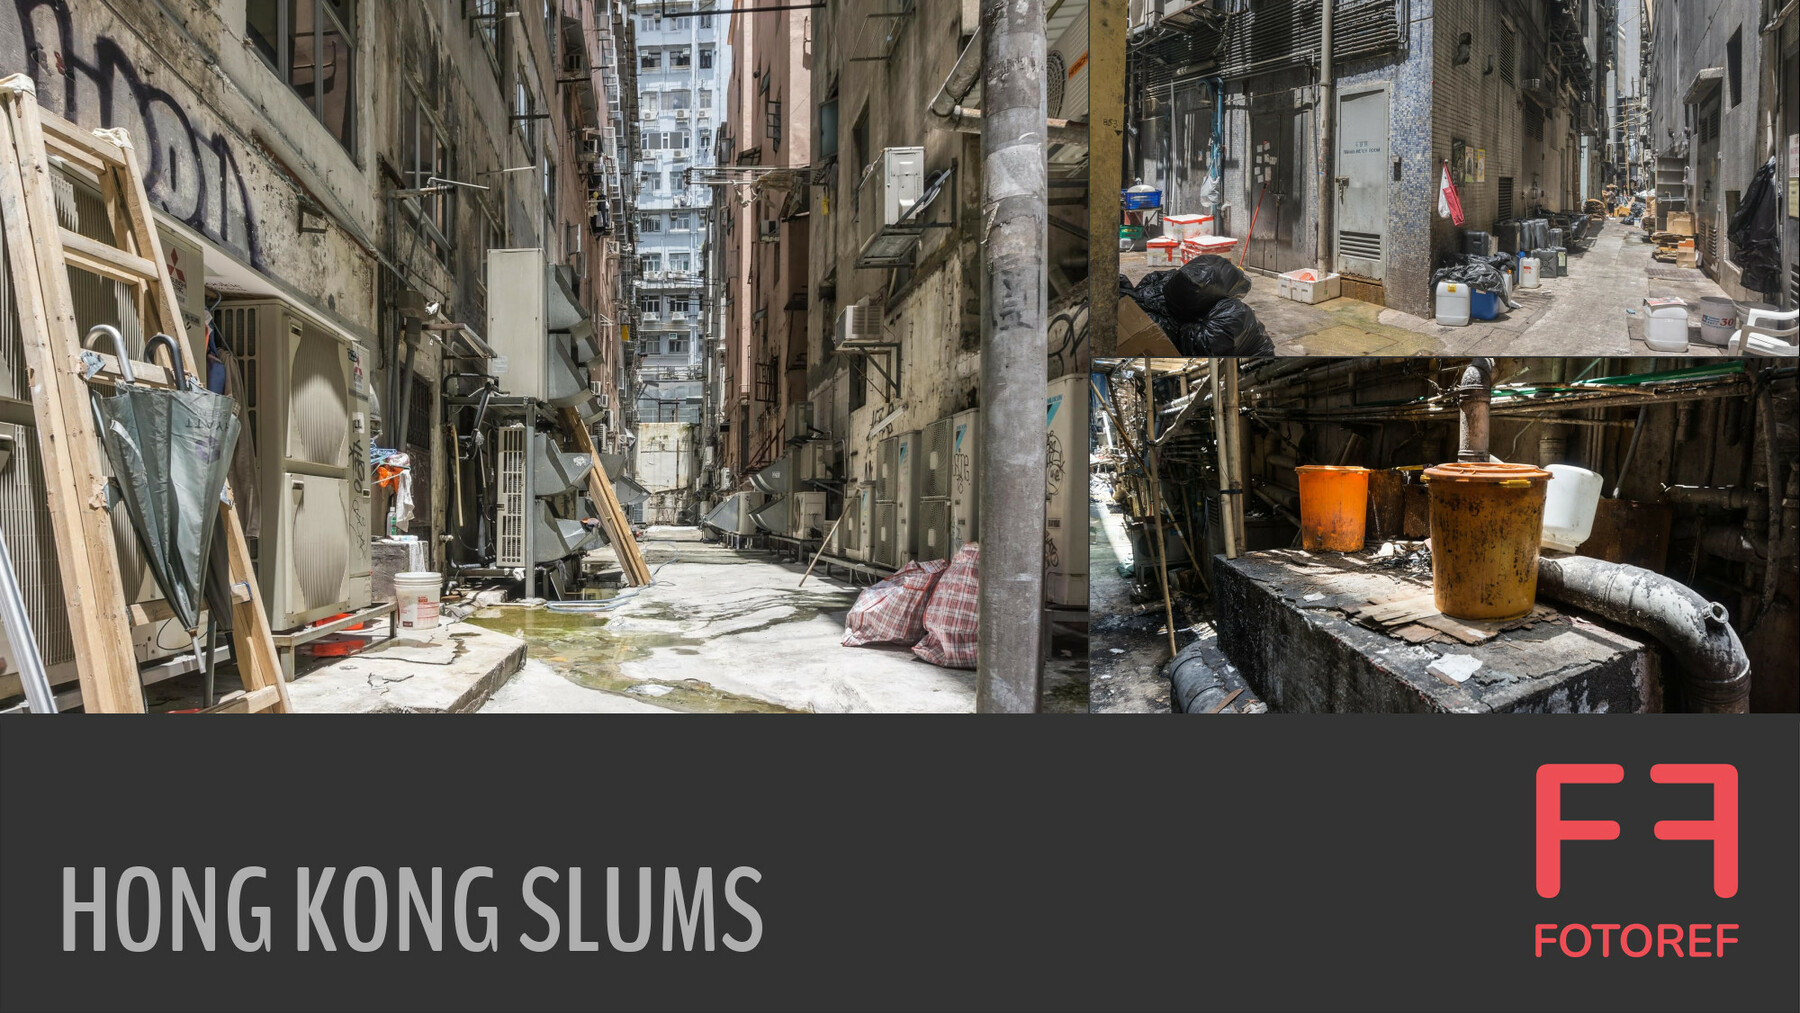 Fotoref Photo Packs 229 Photos Of Hong Kong Slums